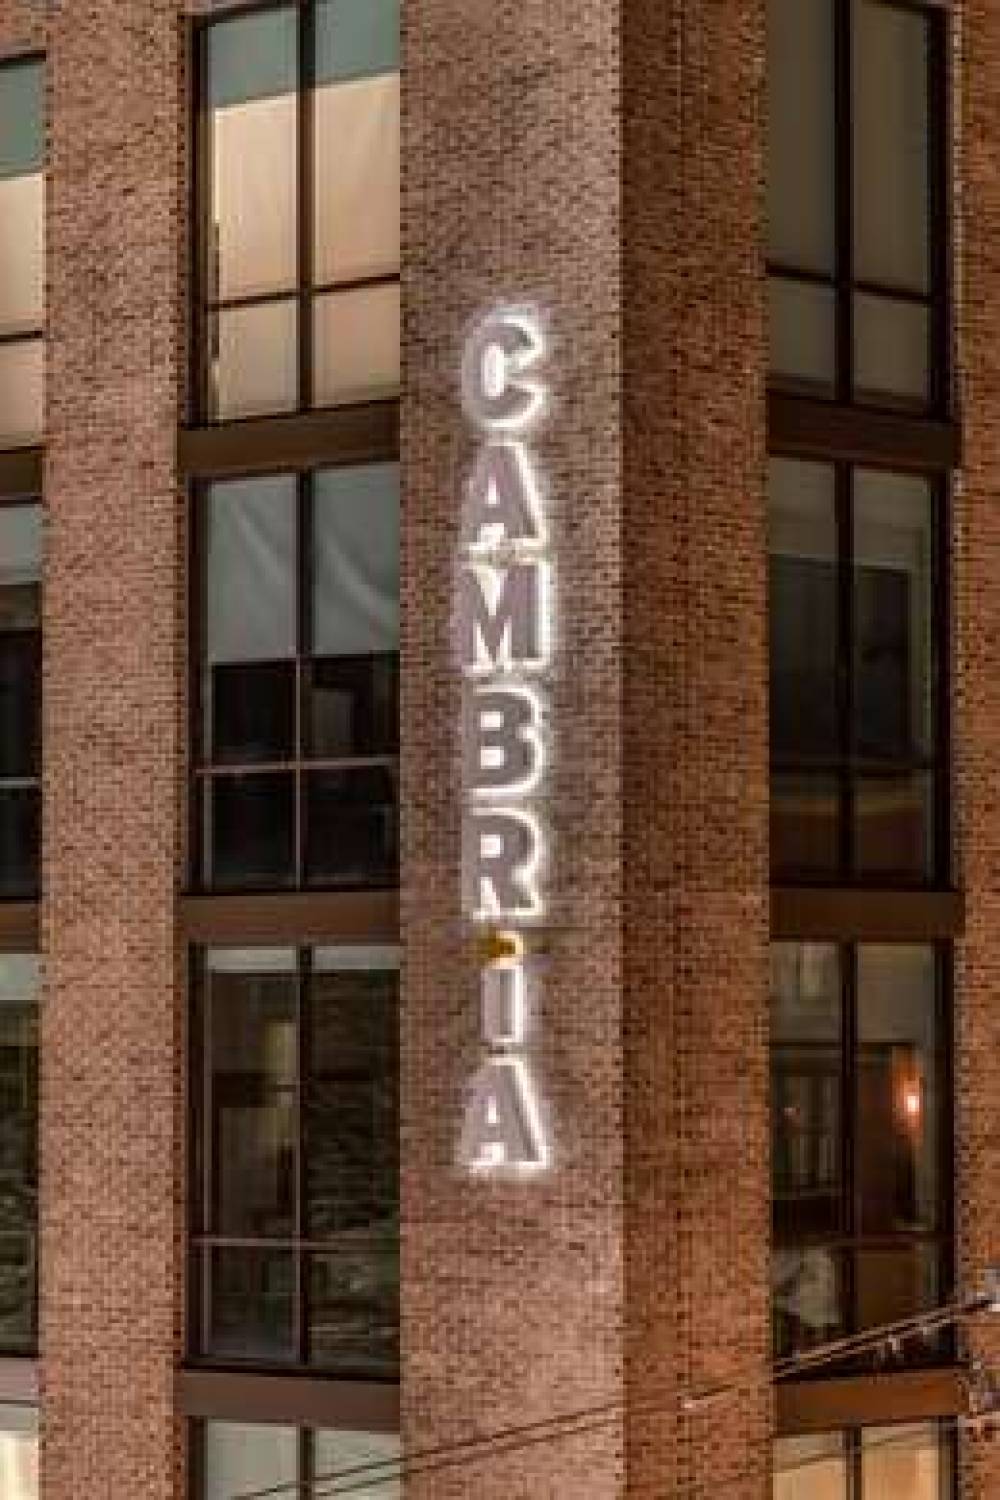 CAMBRIA HOTEL SAVANNAH DOWNTOWN HIS 7